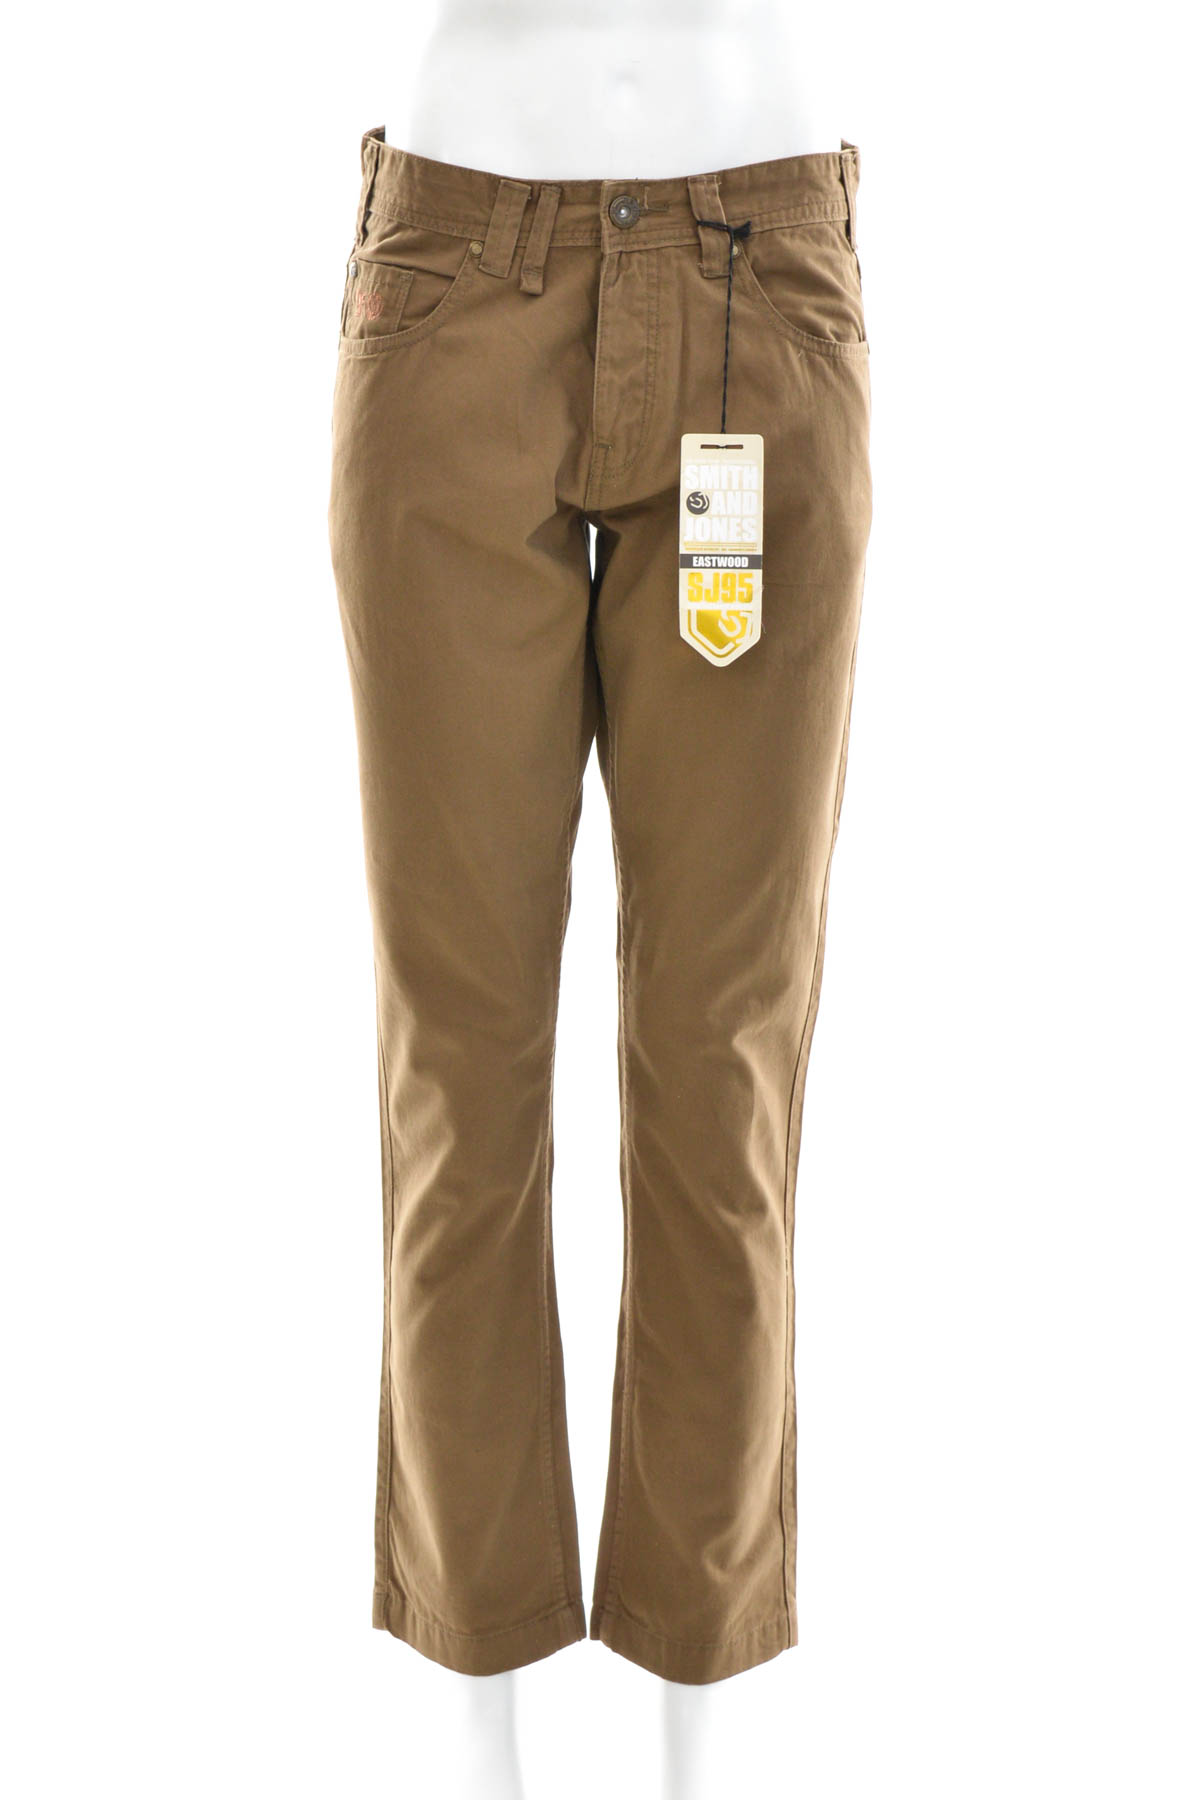 Men's trousers - Smith & Jones SJ95 - 0